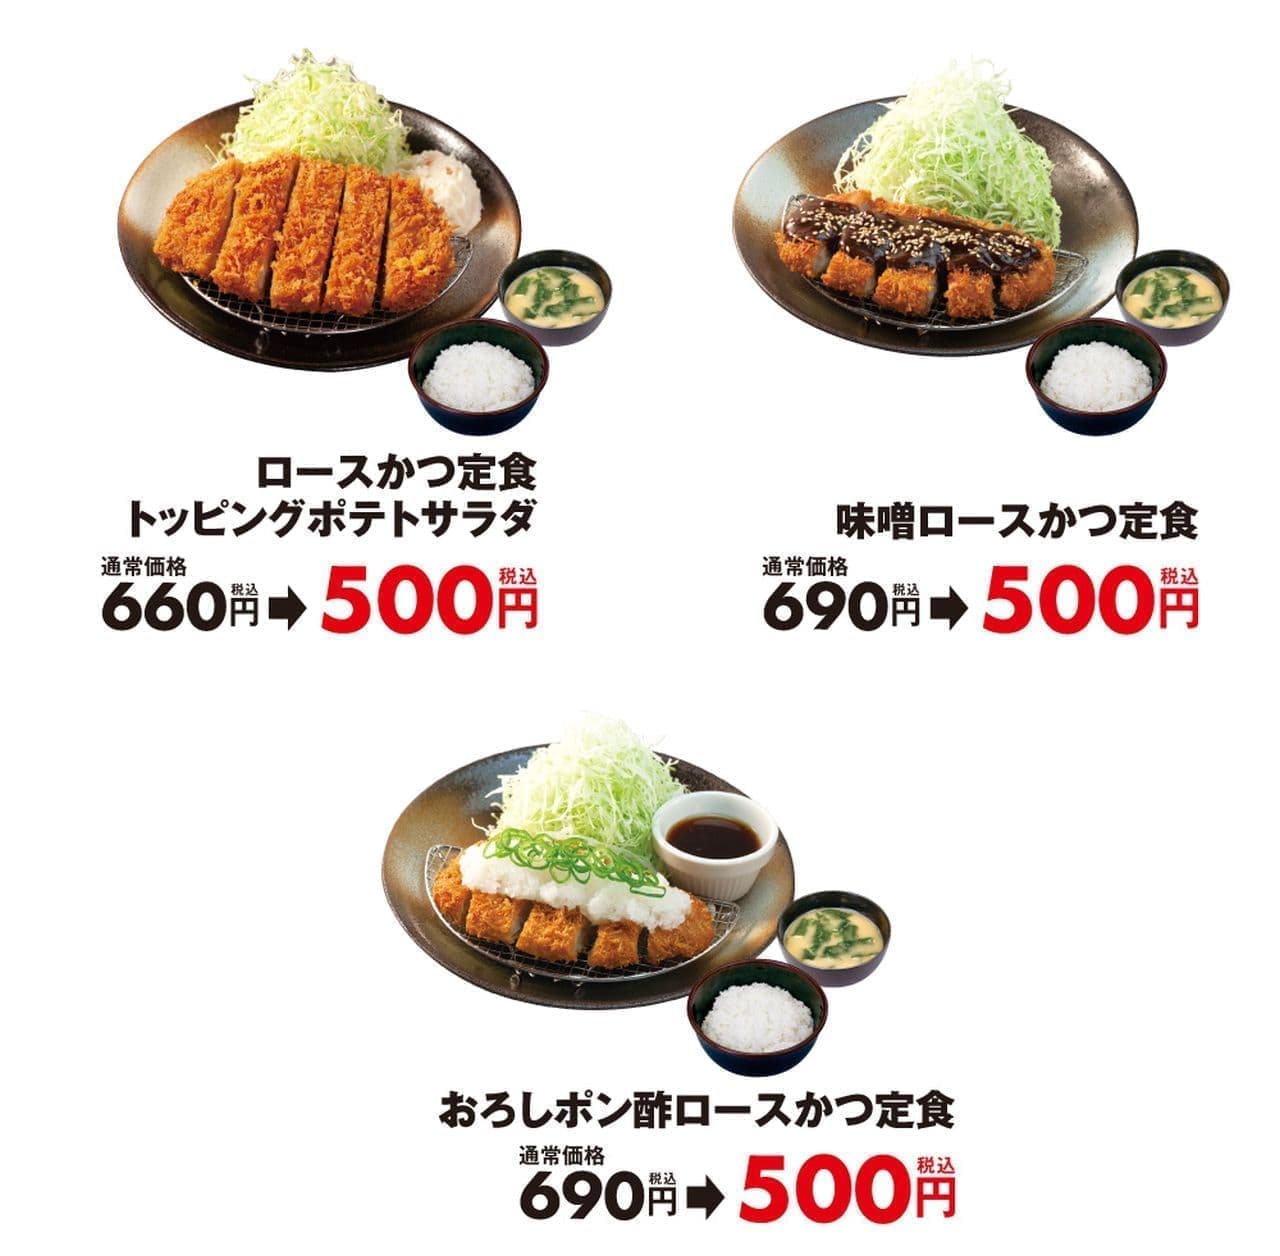 Matsunoya "Miso Roast Katsu Set Meal", "Grated Ponzu Roast Katsu Set Meal", "Roast Katsu Set Meal Topped with Potato Salad".